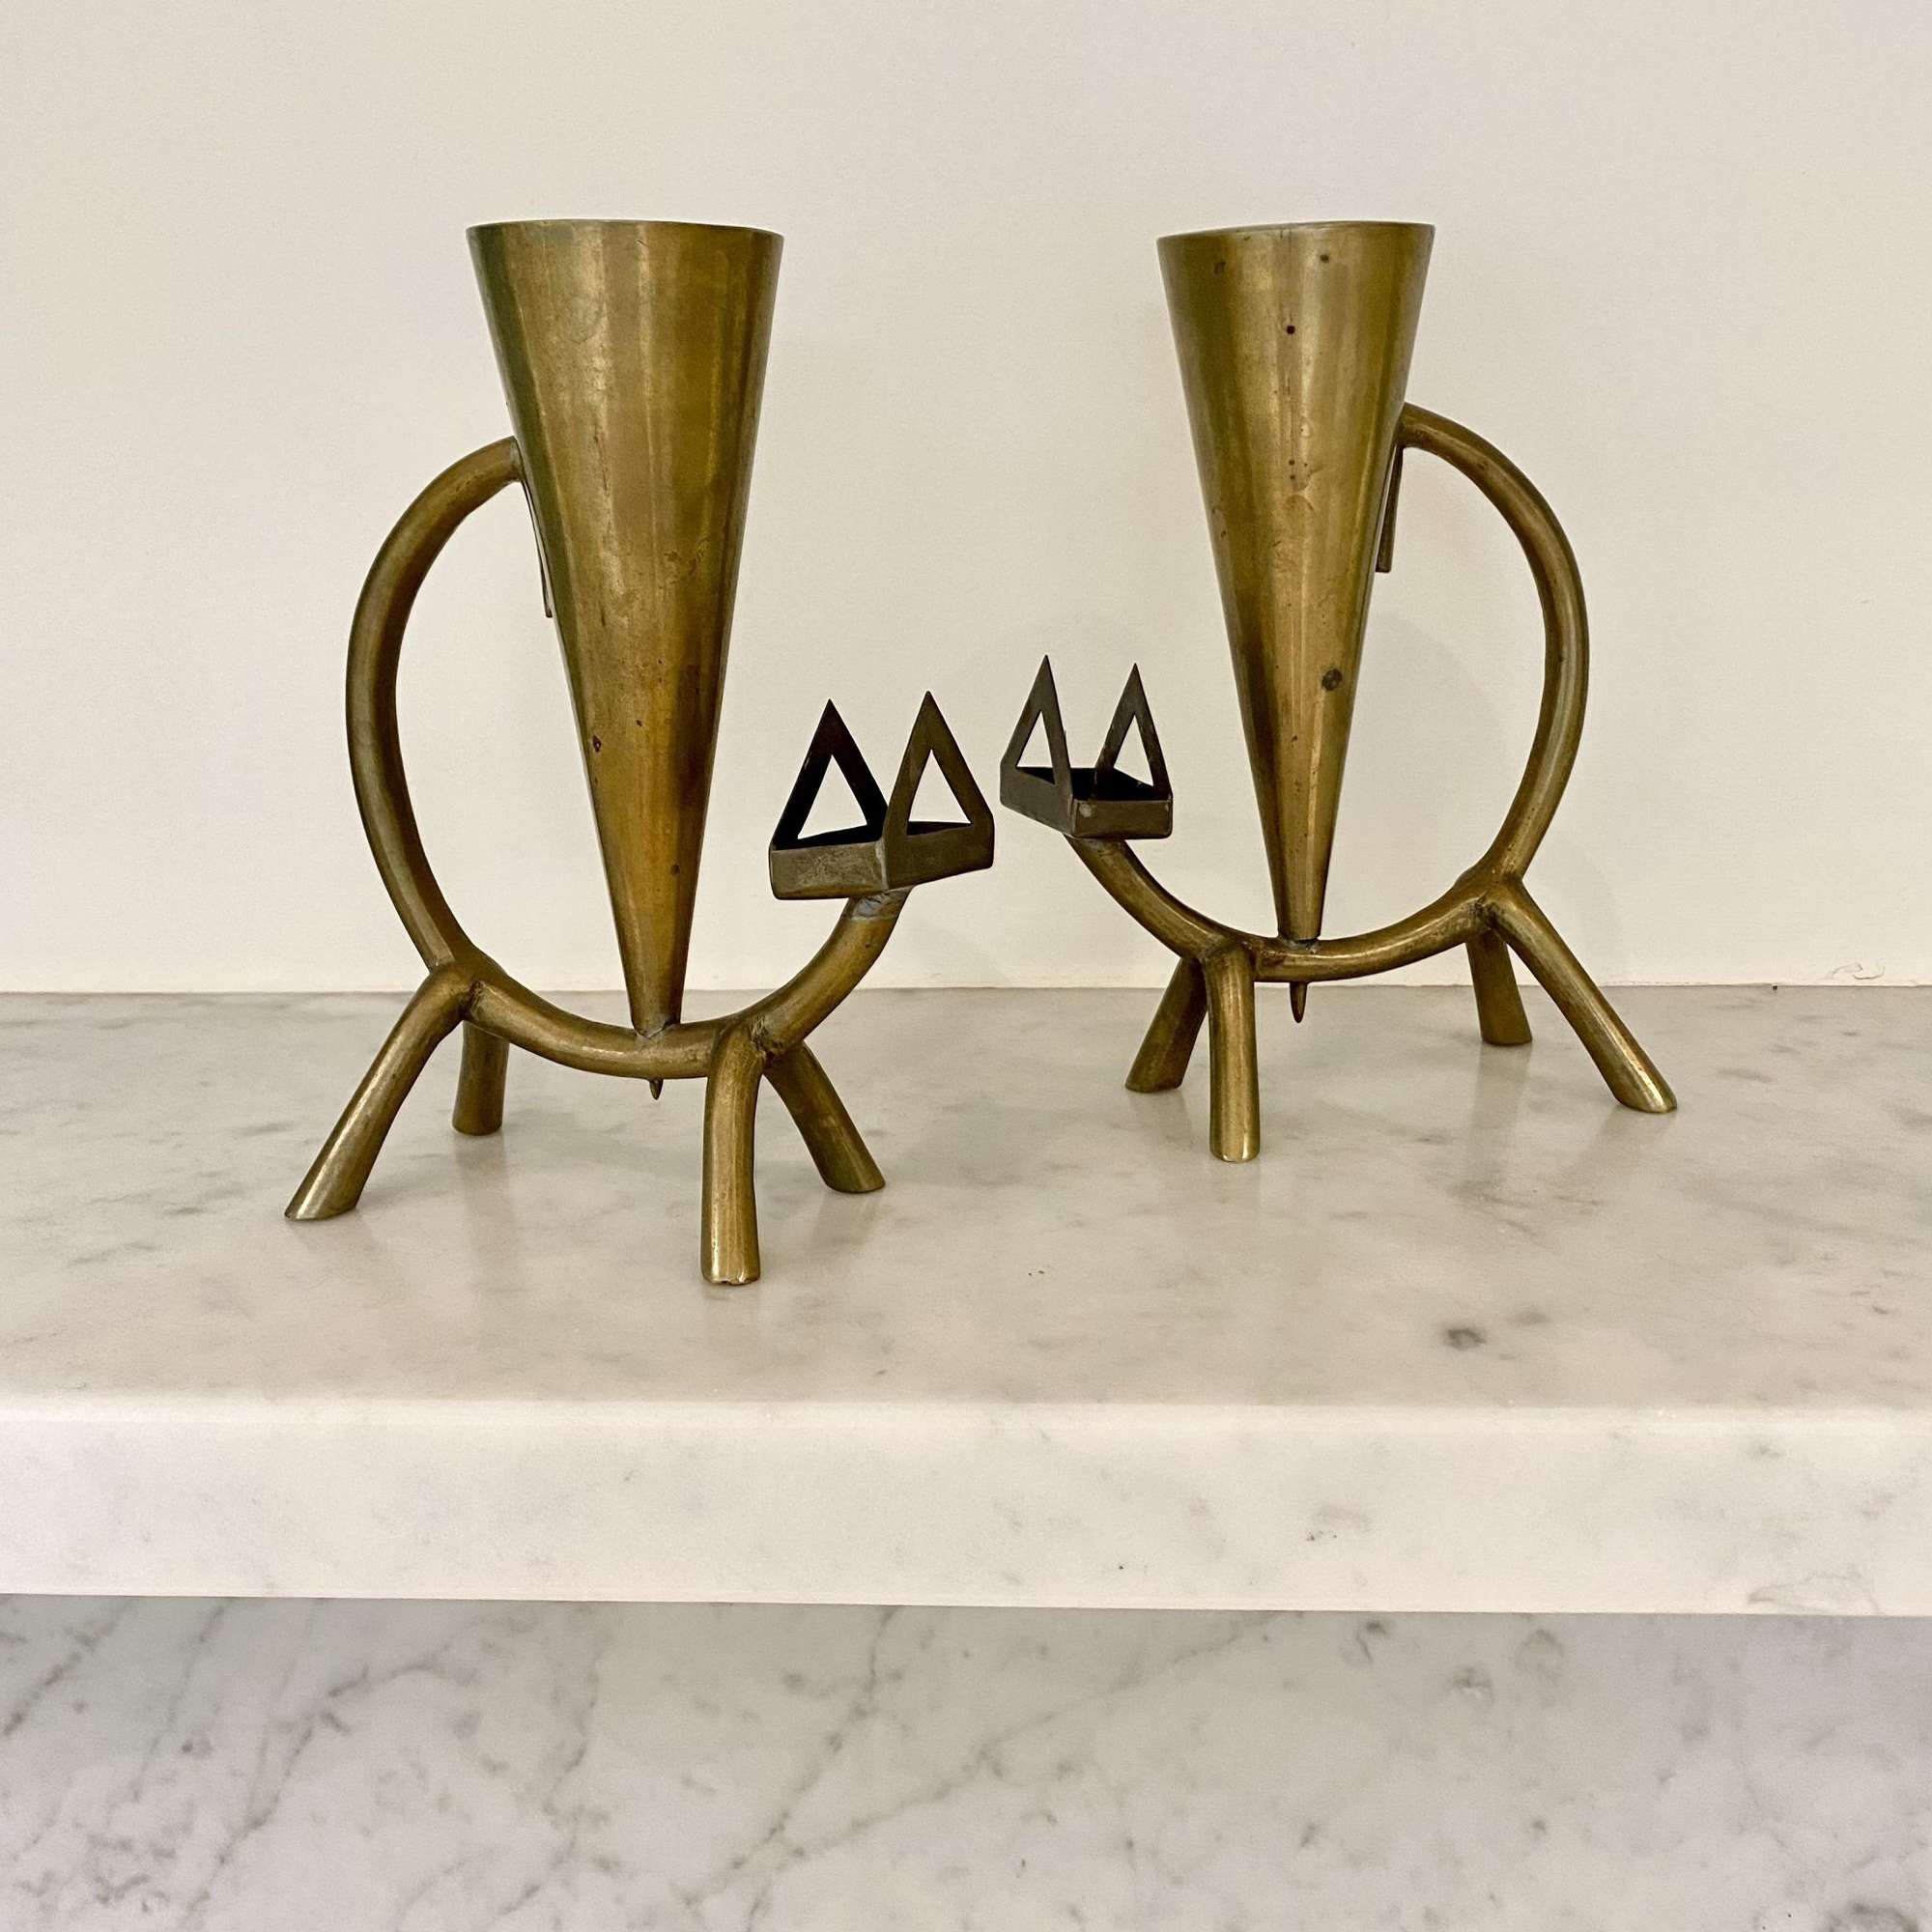 Pair of Art Deco Cat brass candlesticks and match holders